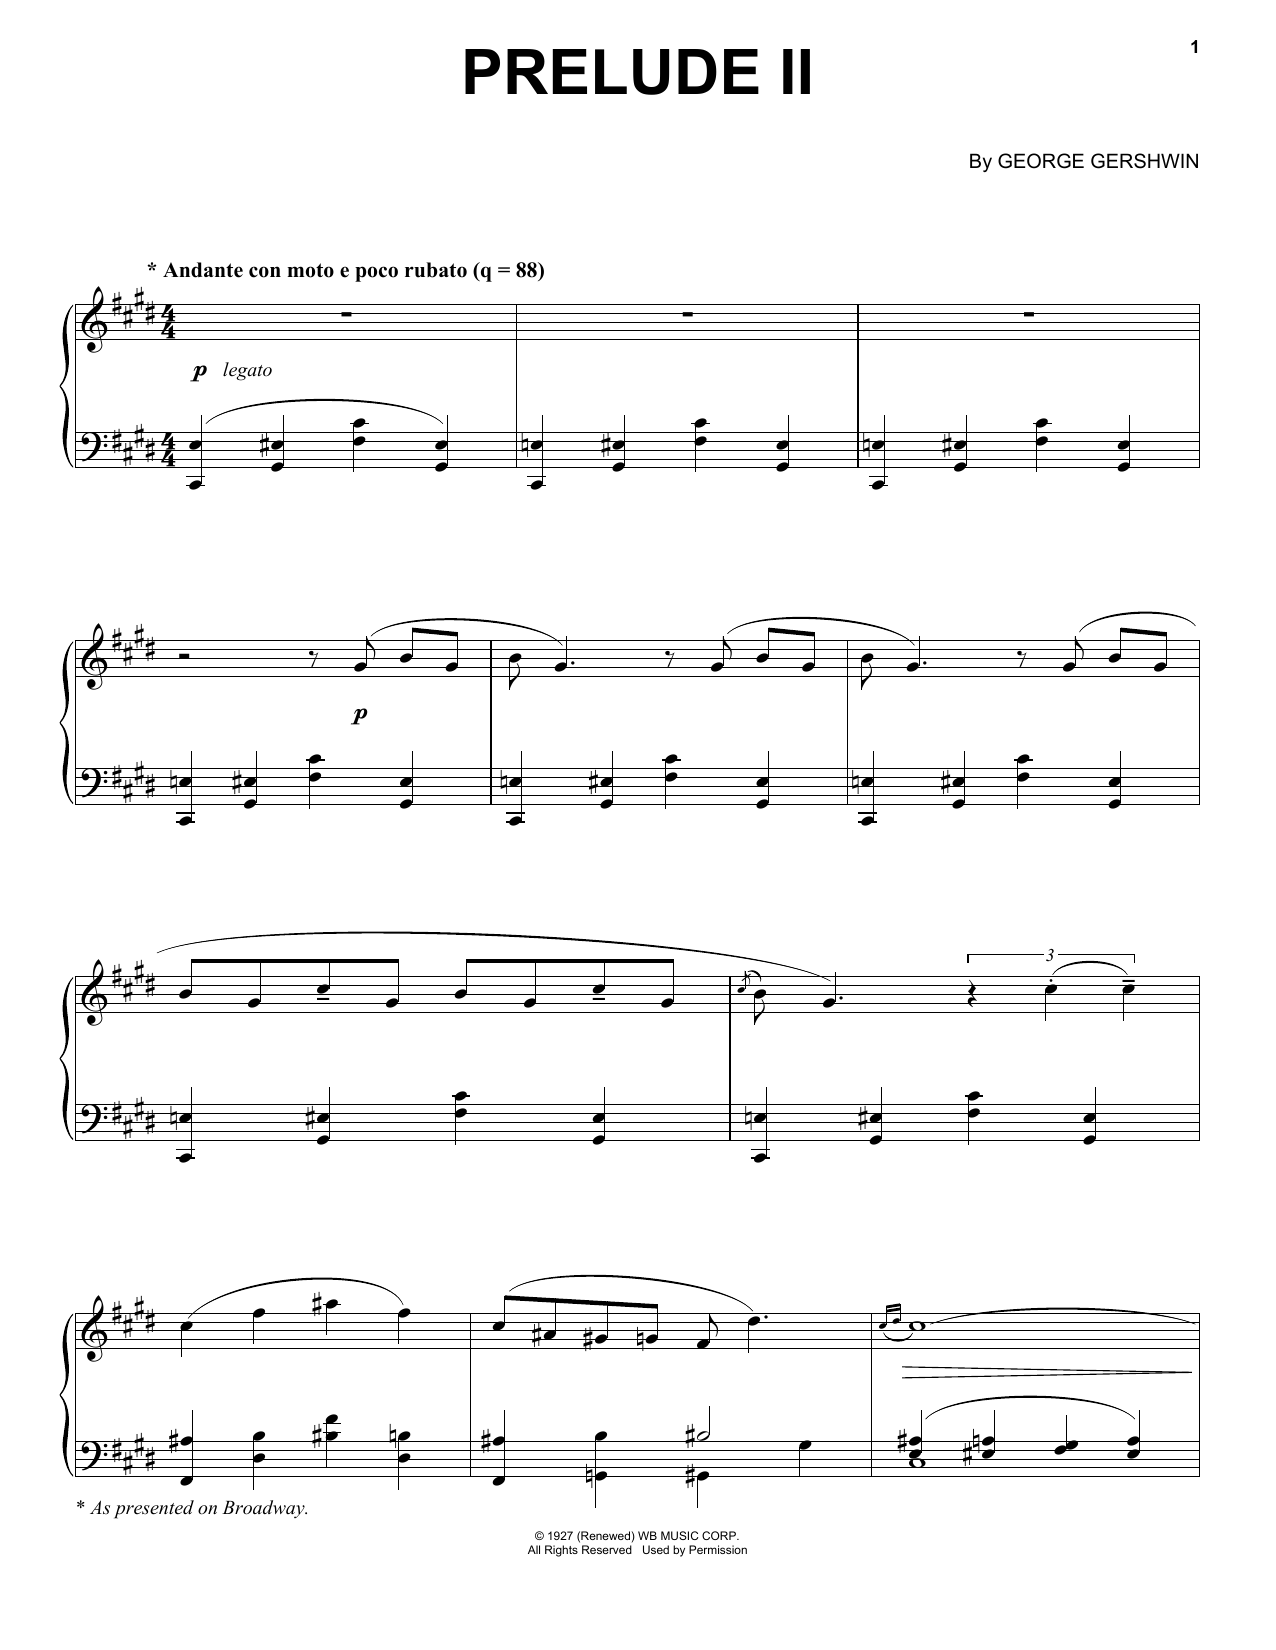 Download George Gershwin Prelude II (Andante Con Moto E Poco Rub Sheet Music